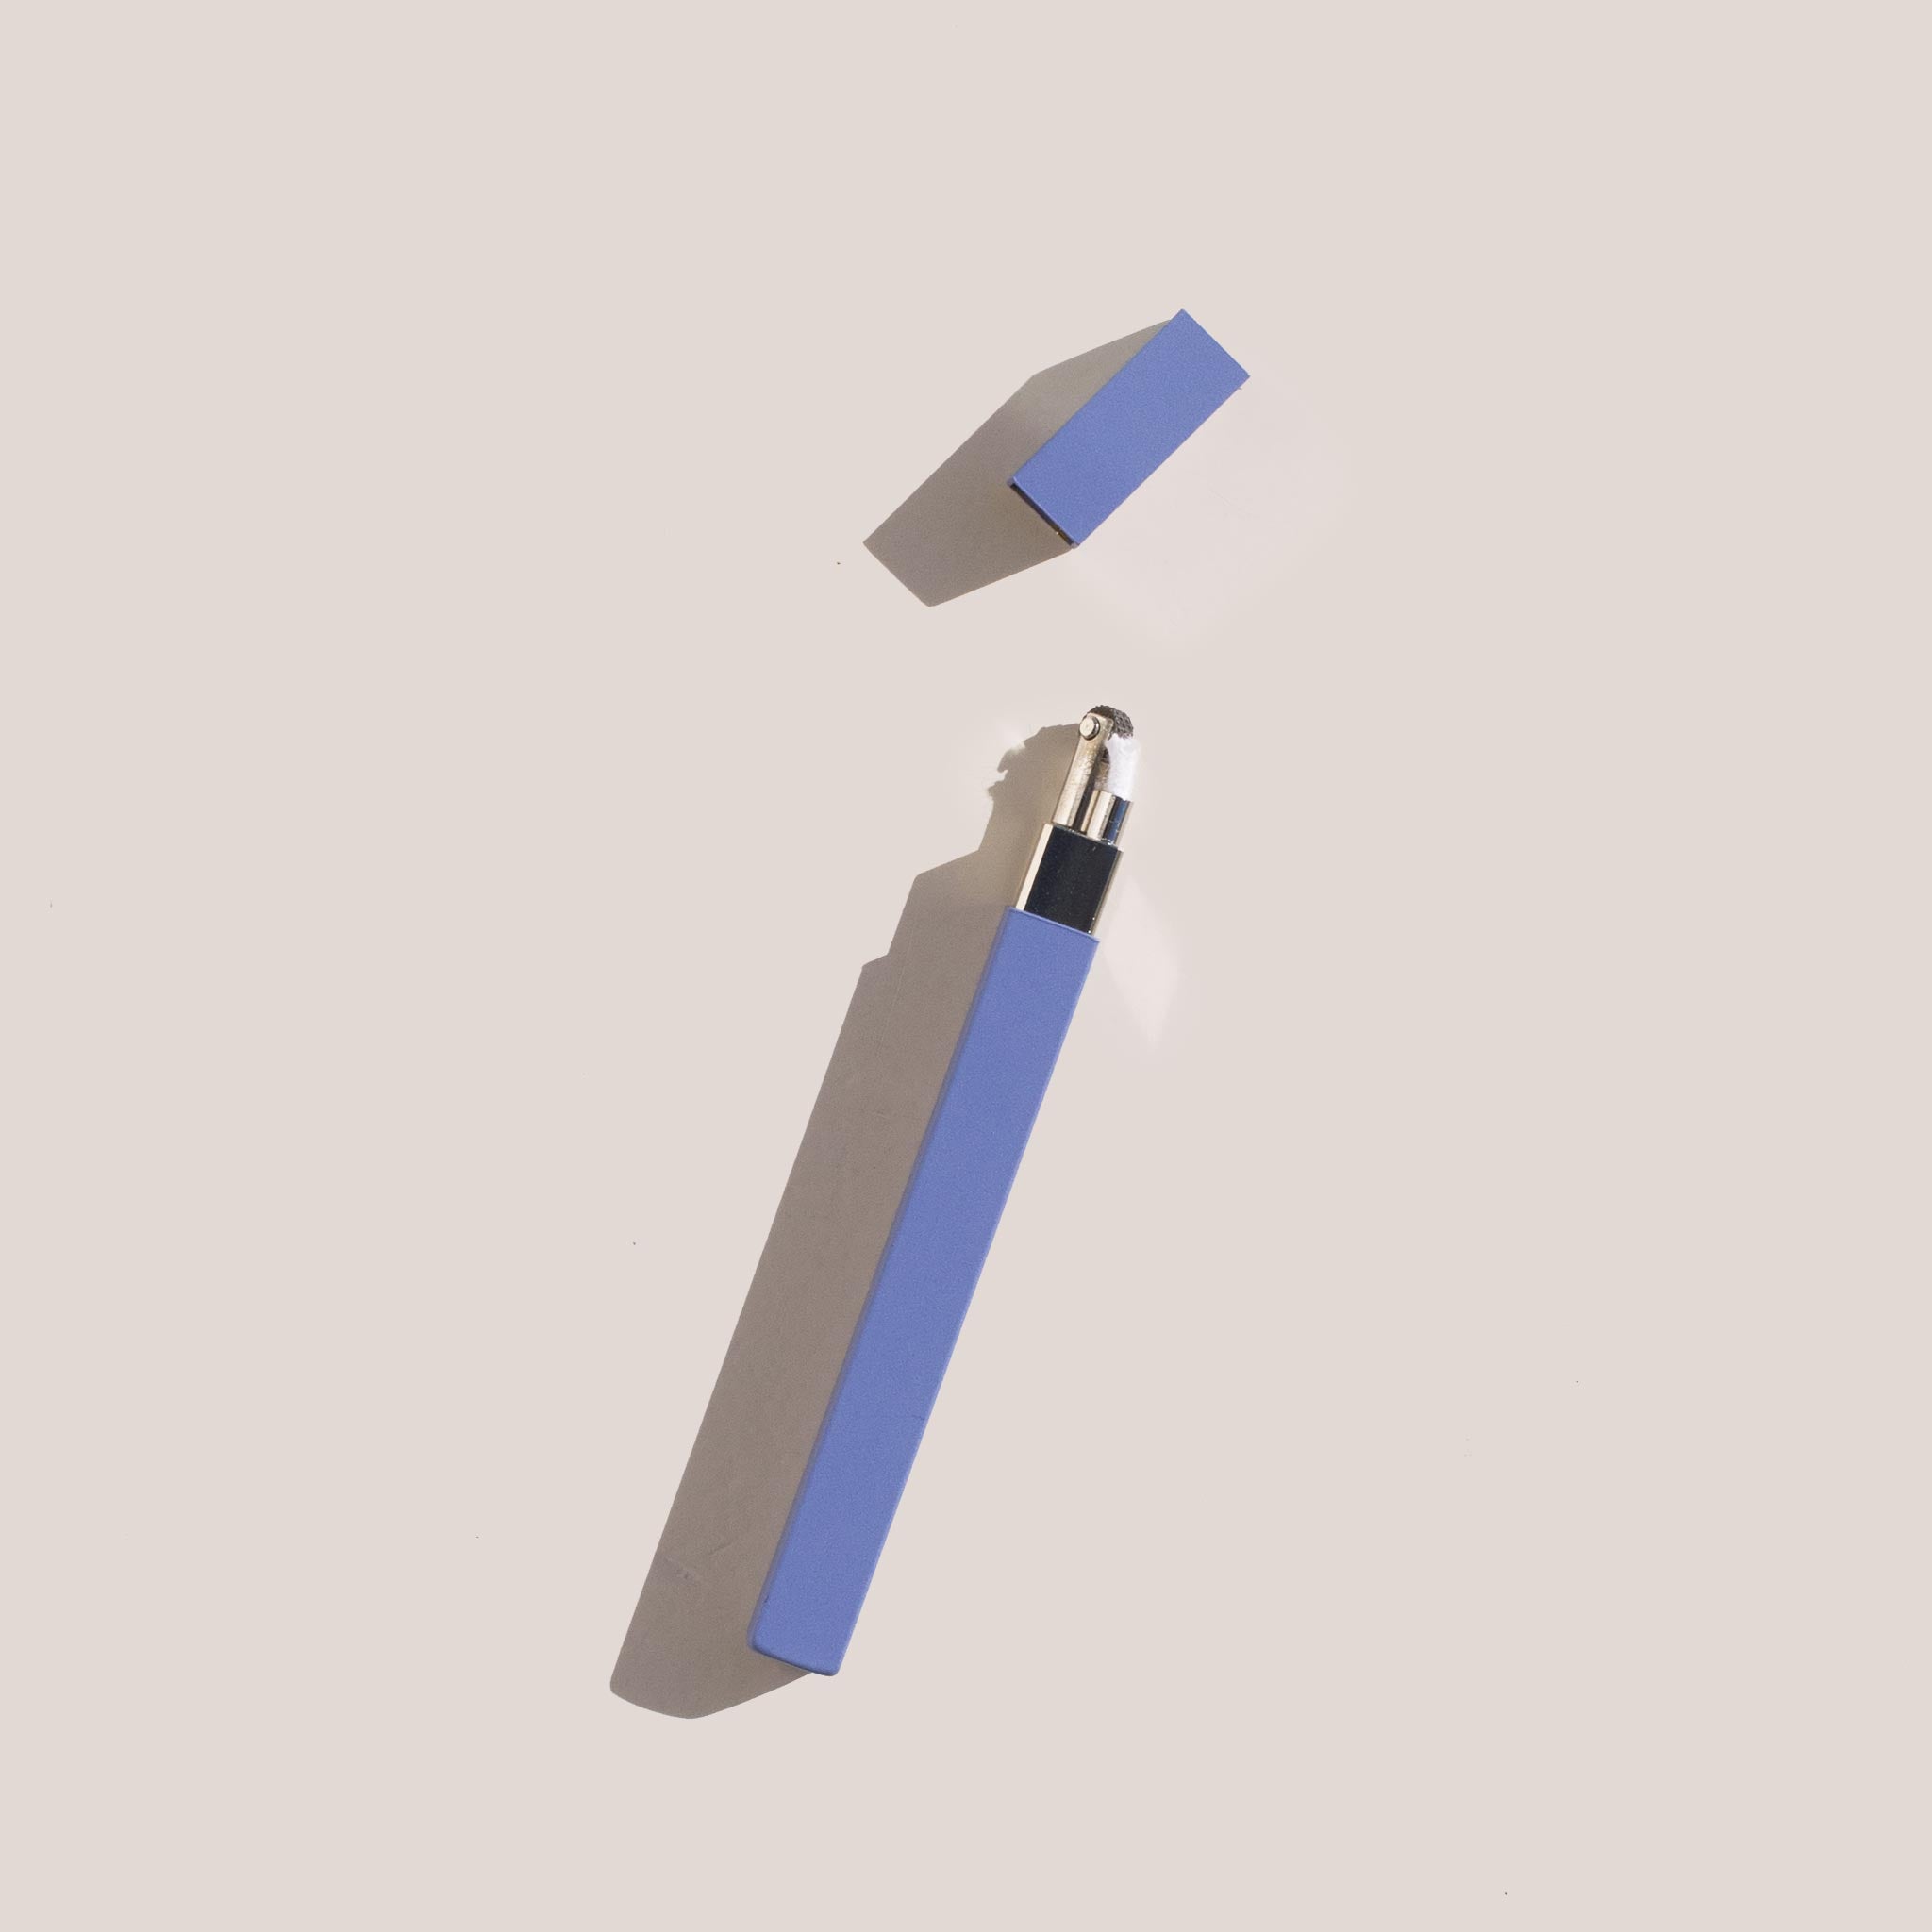 Tsubota Pearl - Mono Queue Stick Lighter in Hazy Blue.